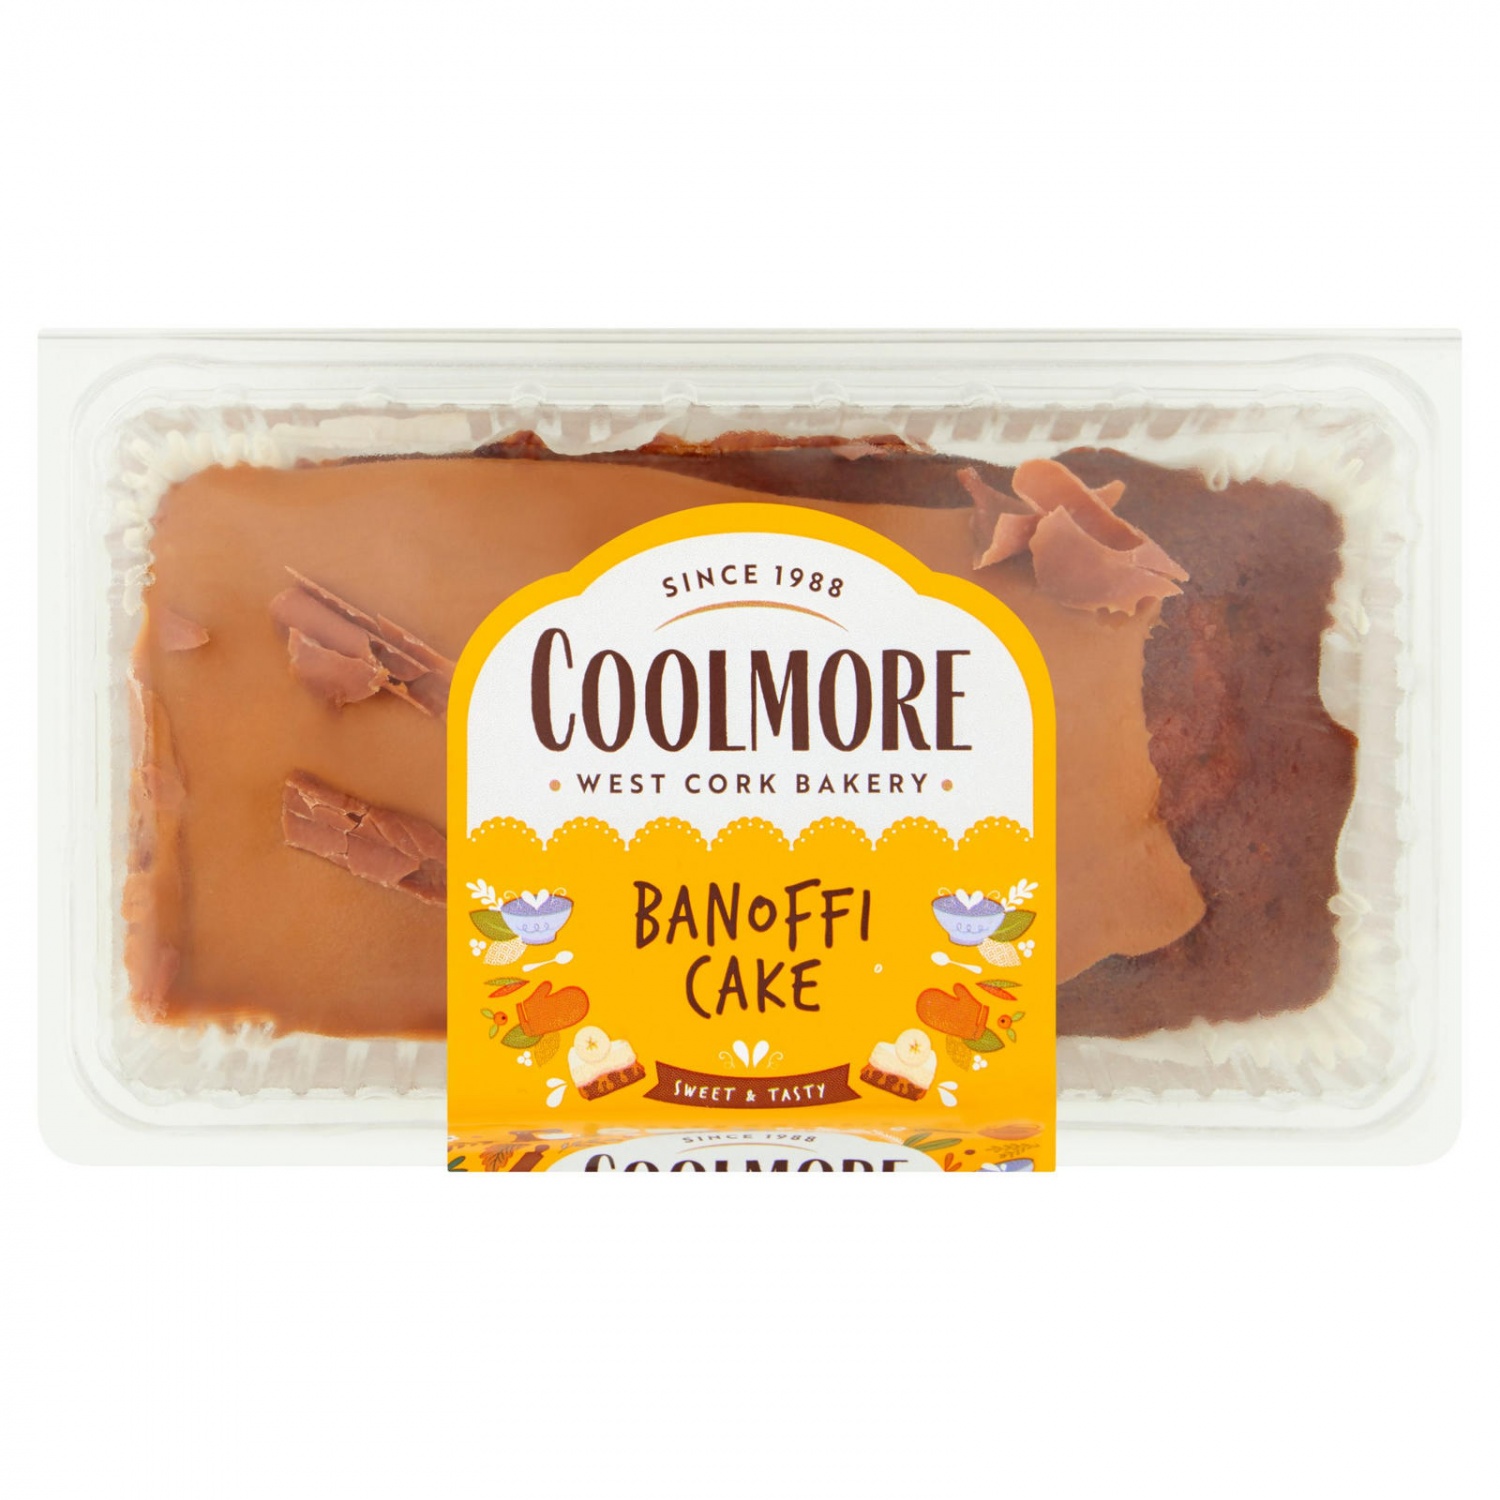 Coolmore Banoffi Cake 400g (Nov 23) RRP £2.49 CLEARANCE XL £1.00